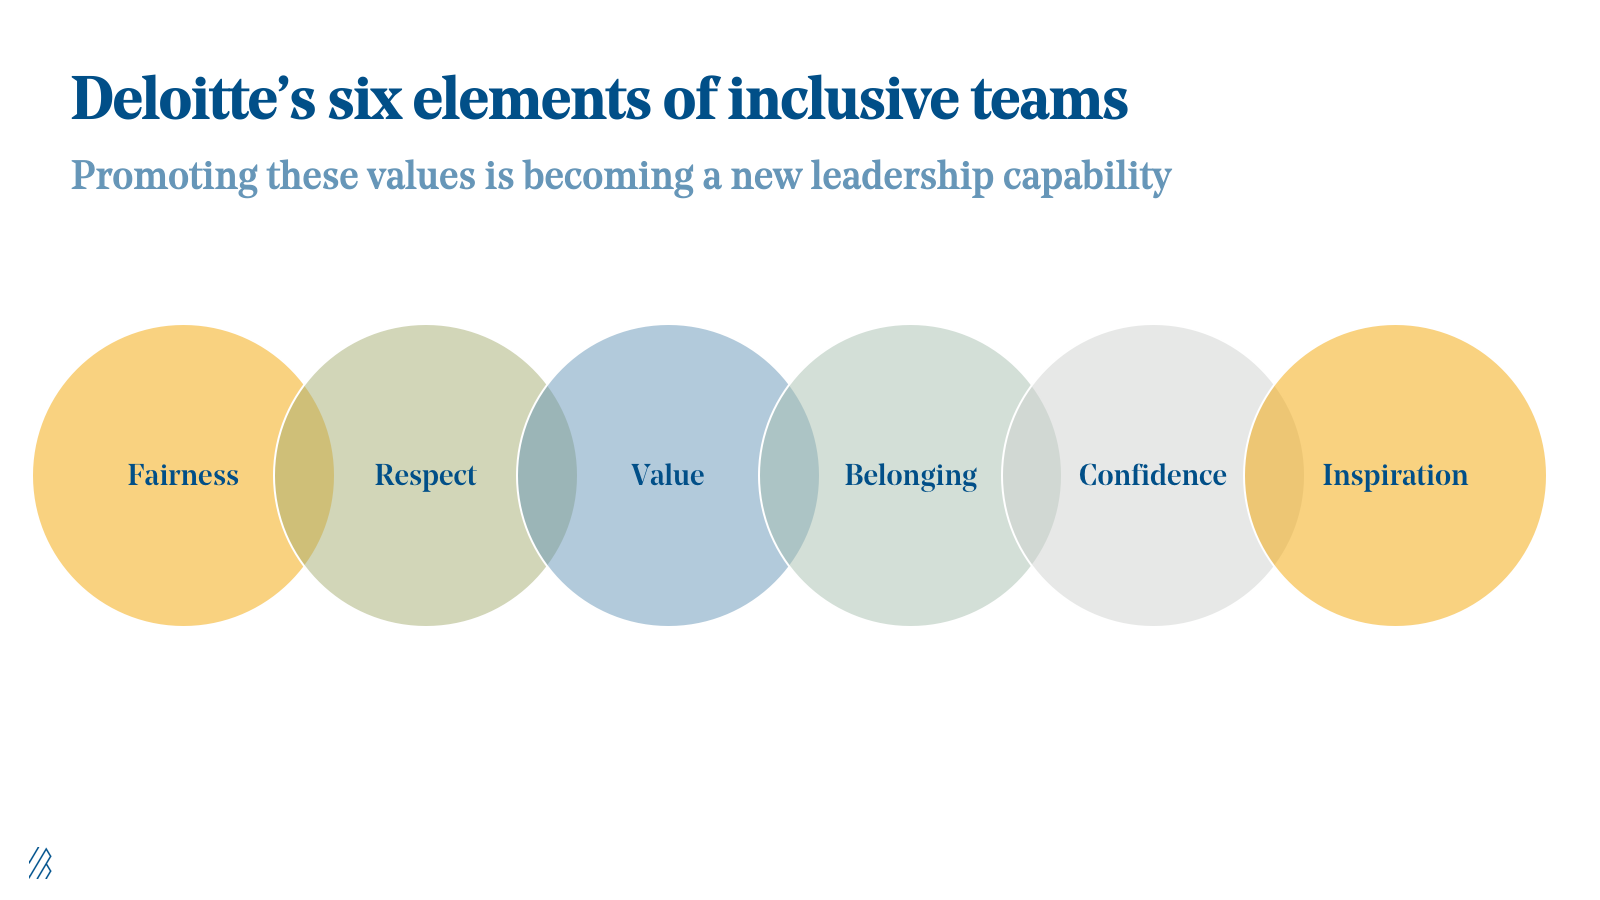 Deloitte's six elements of inclusive teams